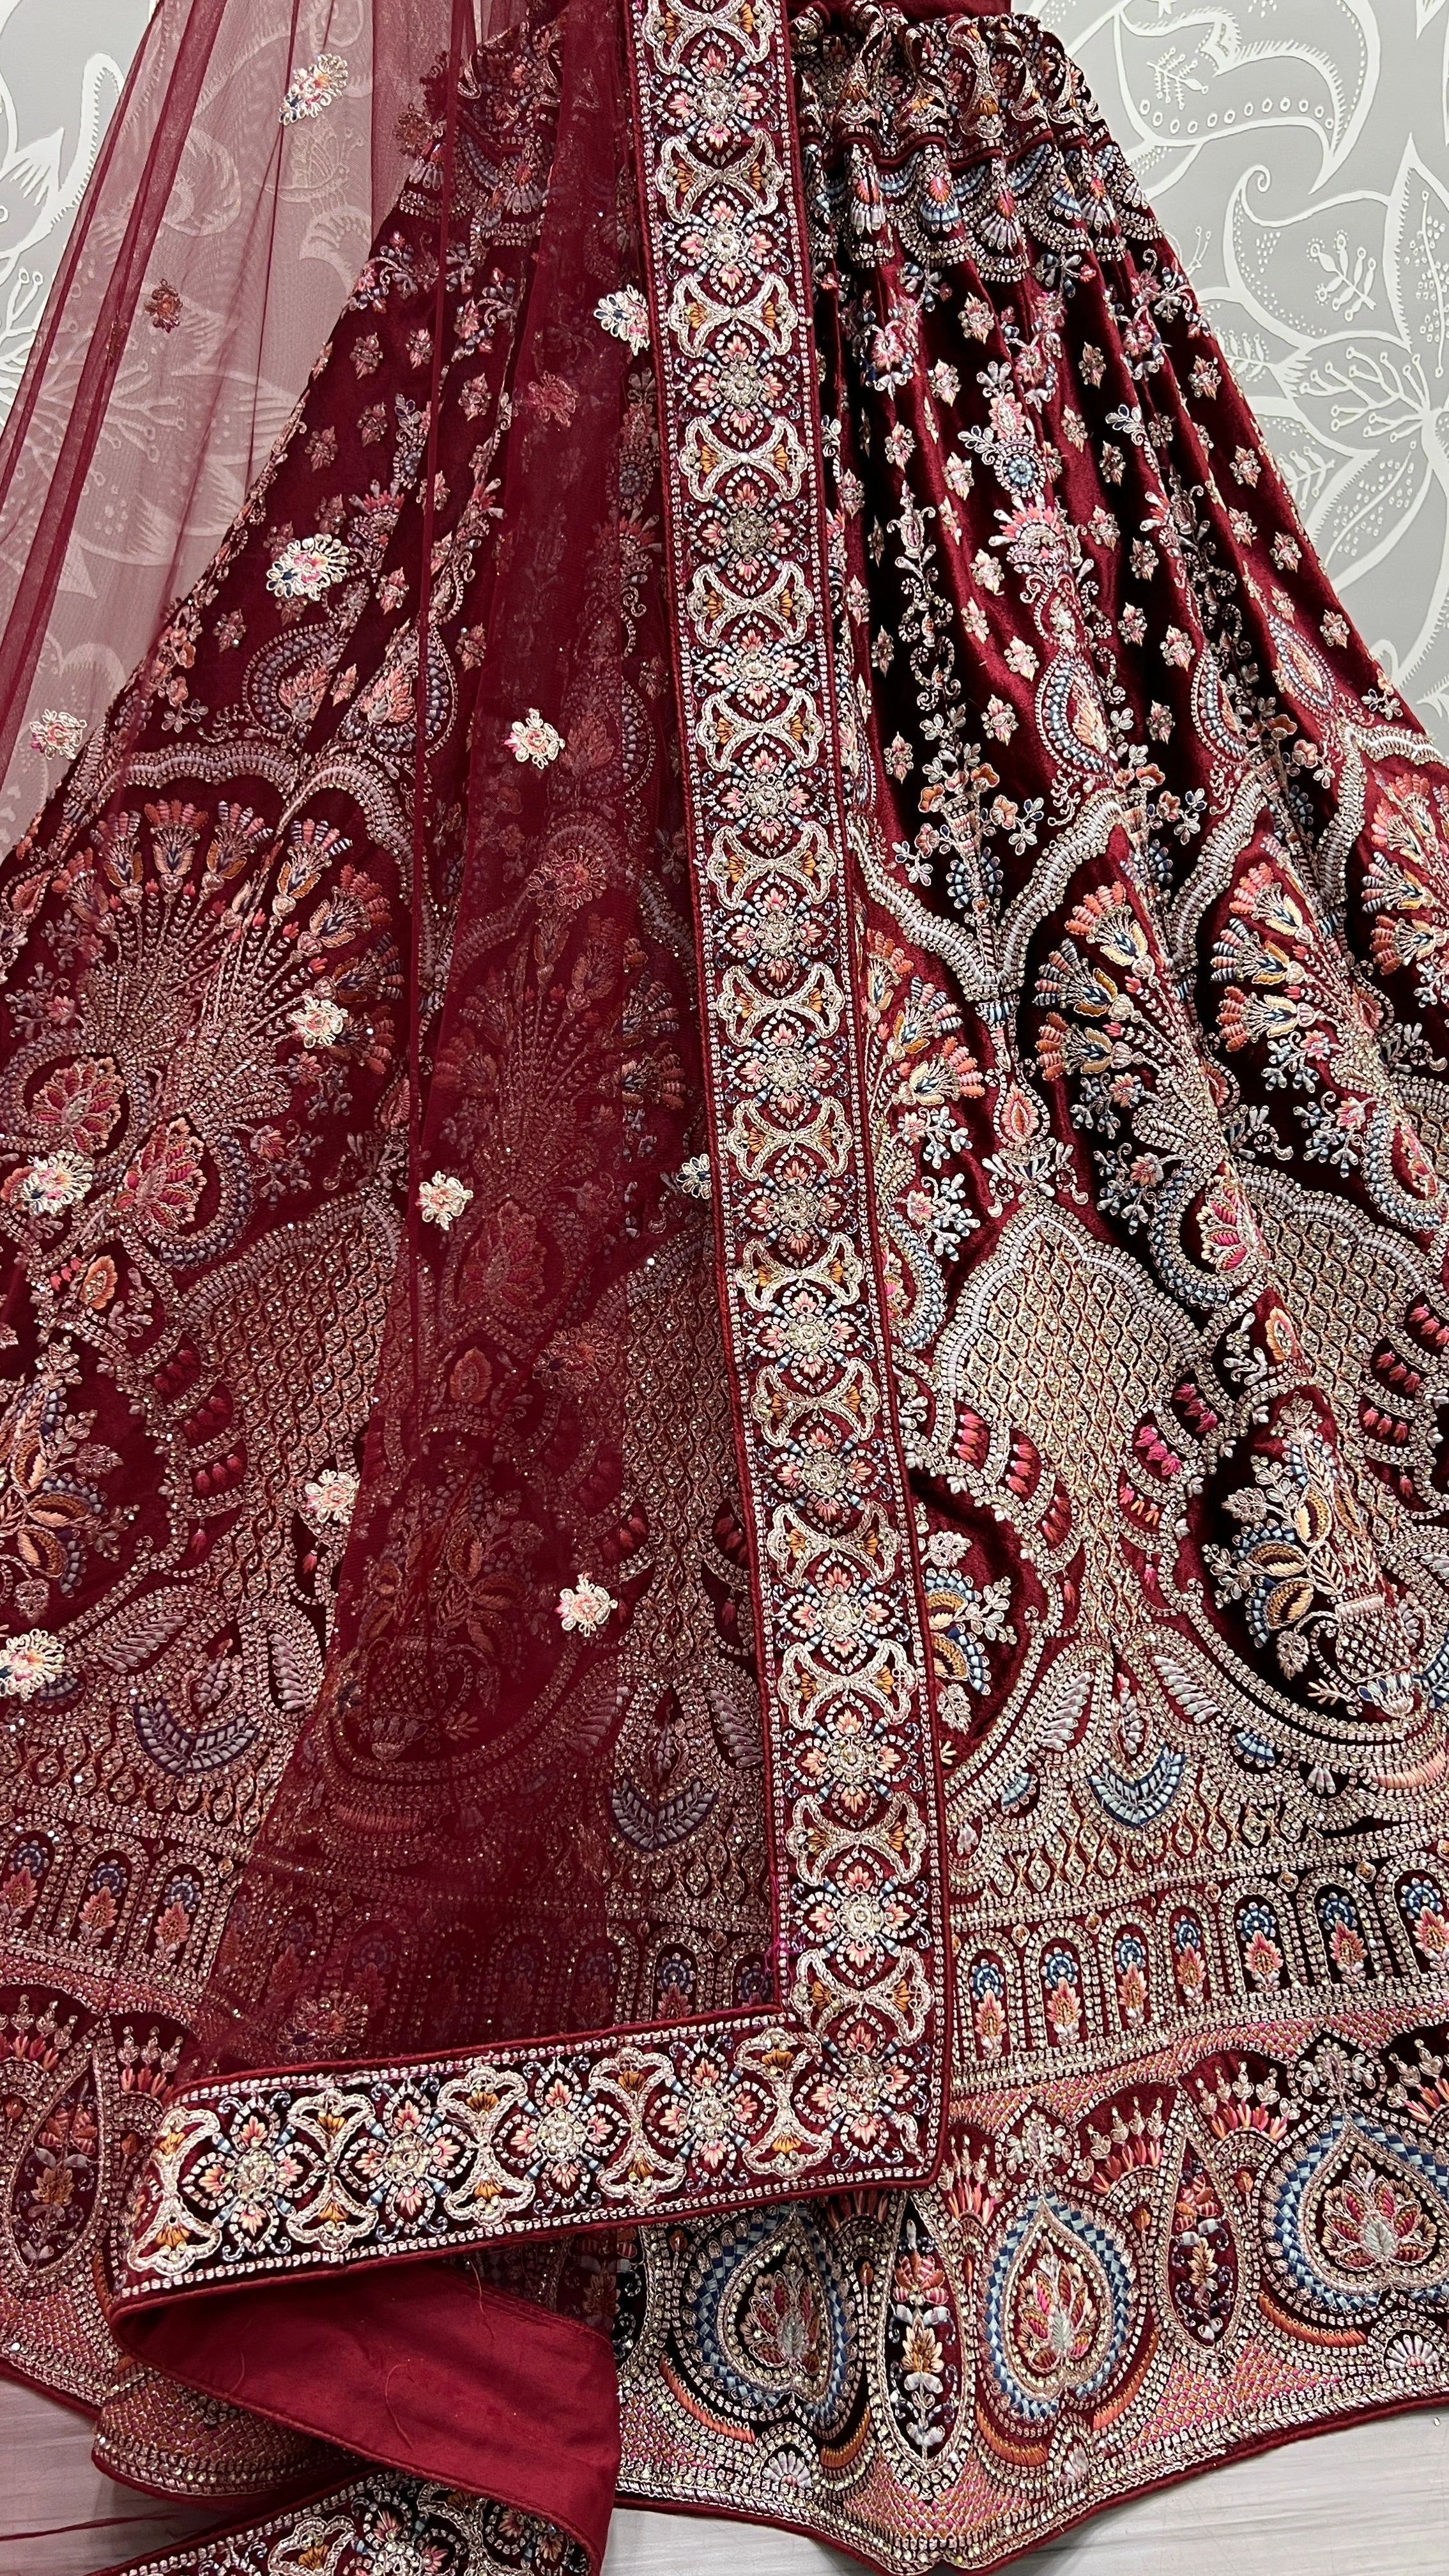 Sabyasachi Inspired Red Bridal Lehenga Choli With Soft Net Dupatta | Indian Wedding Dress | Ghaghra Choli | Lehenga For Women | Lehengas India-1